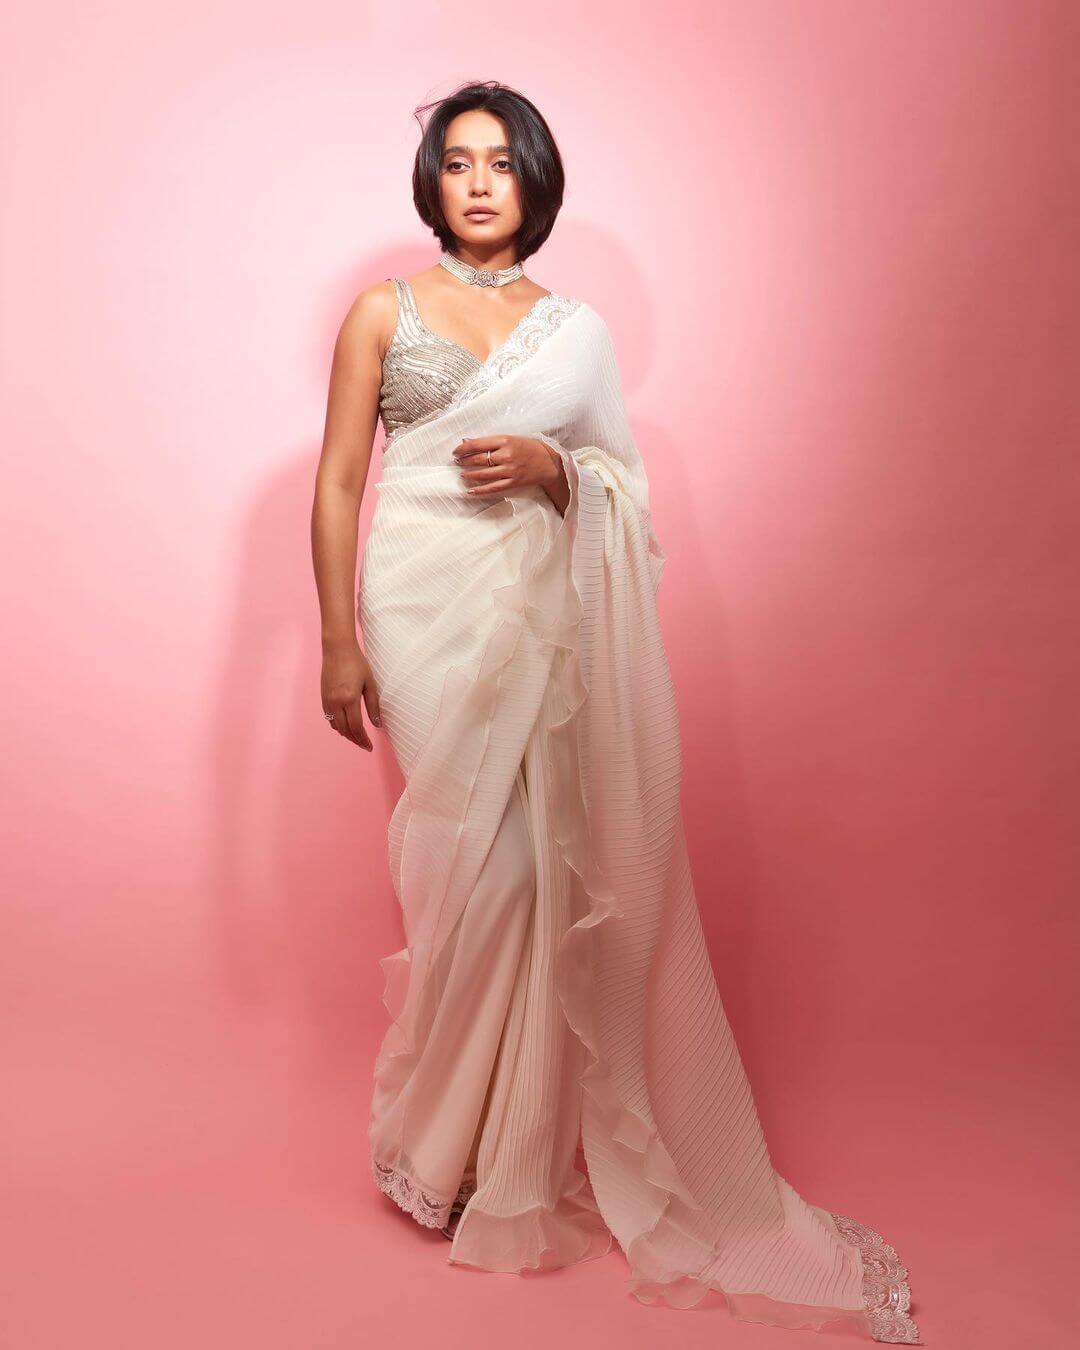 Fabulous Sayani in White Crushed Saree Looks Classy and Elegant